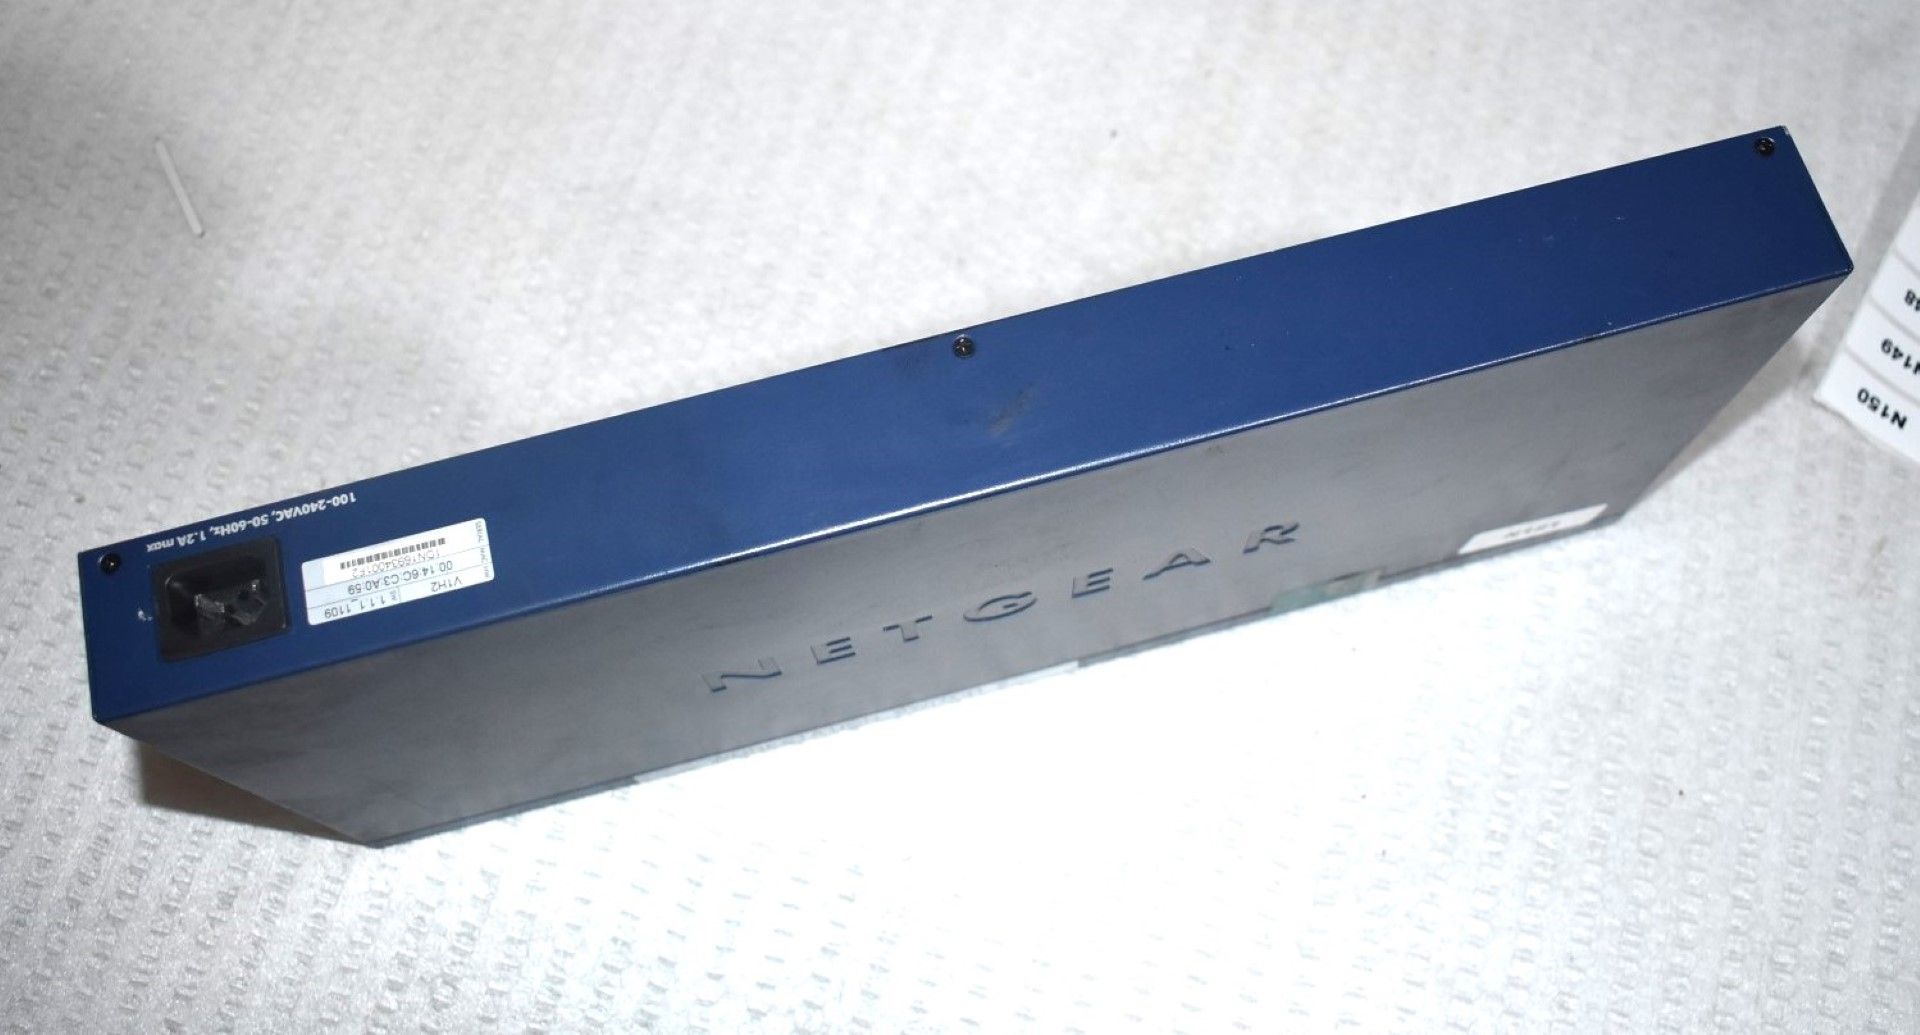 1 x Netgear GS750T2 50 Port Smart Switch - Image 5 of 5